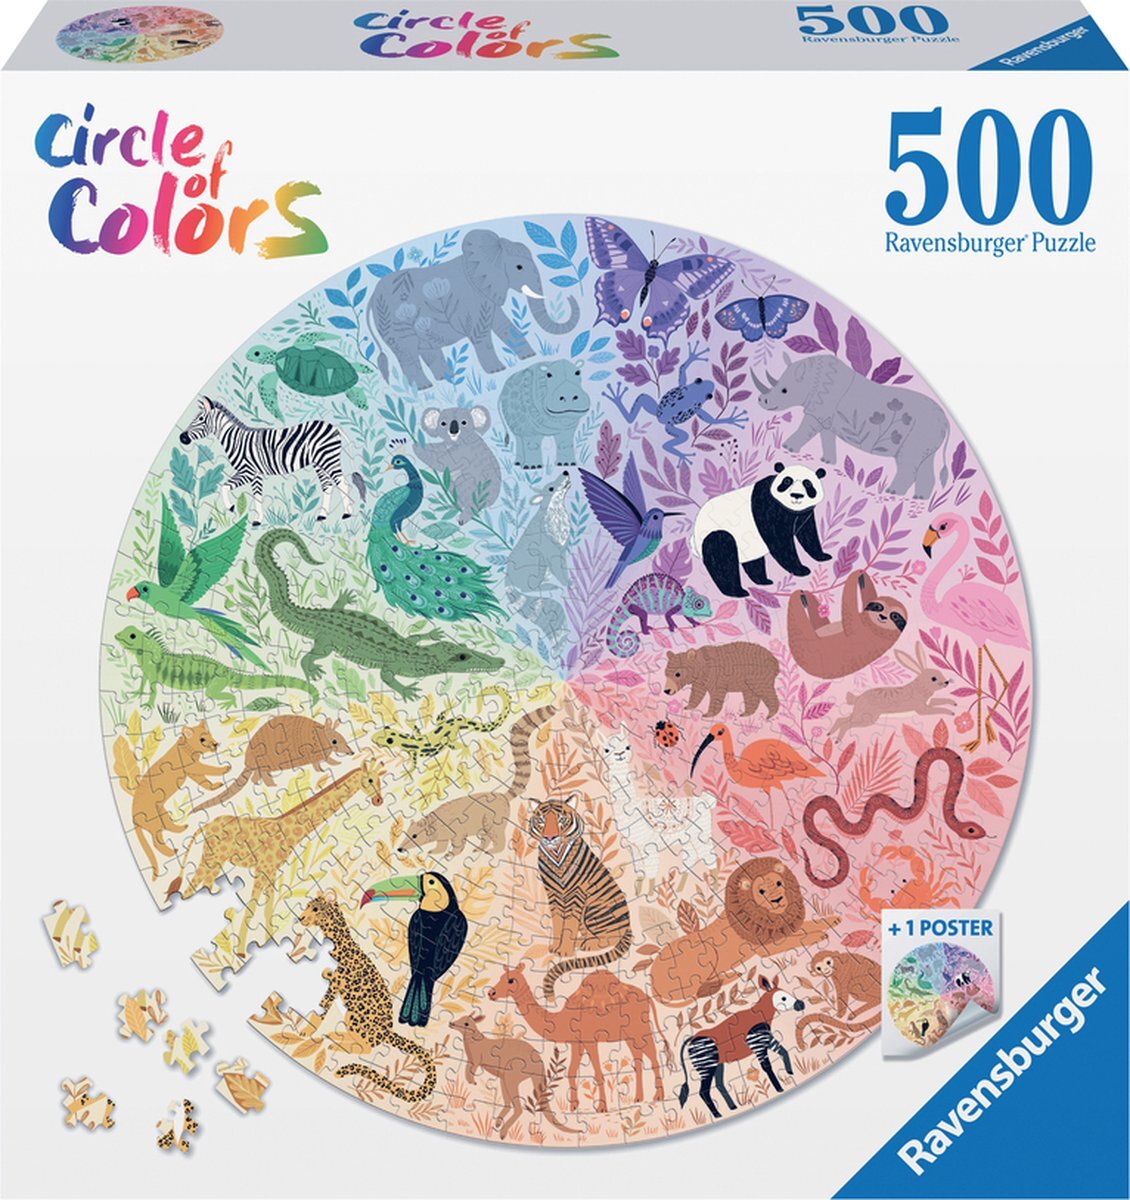 Ravensburger Circle of Colors - Animals Puzzel (500 stukjes)